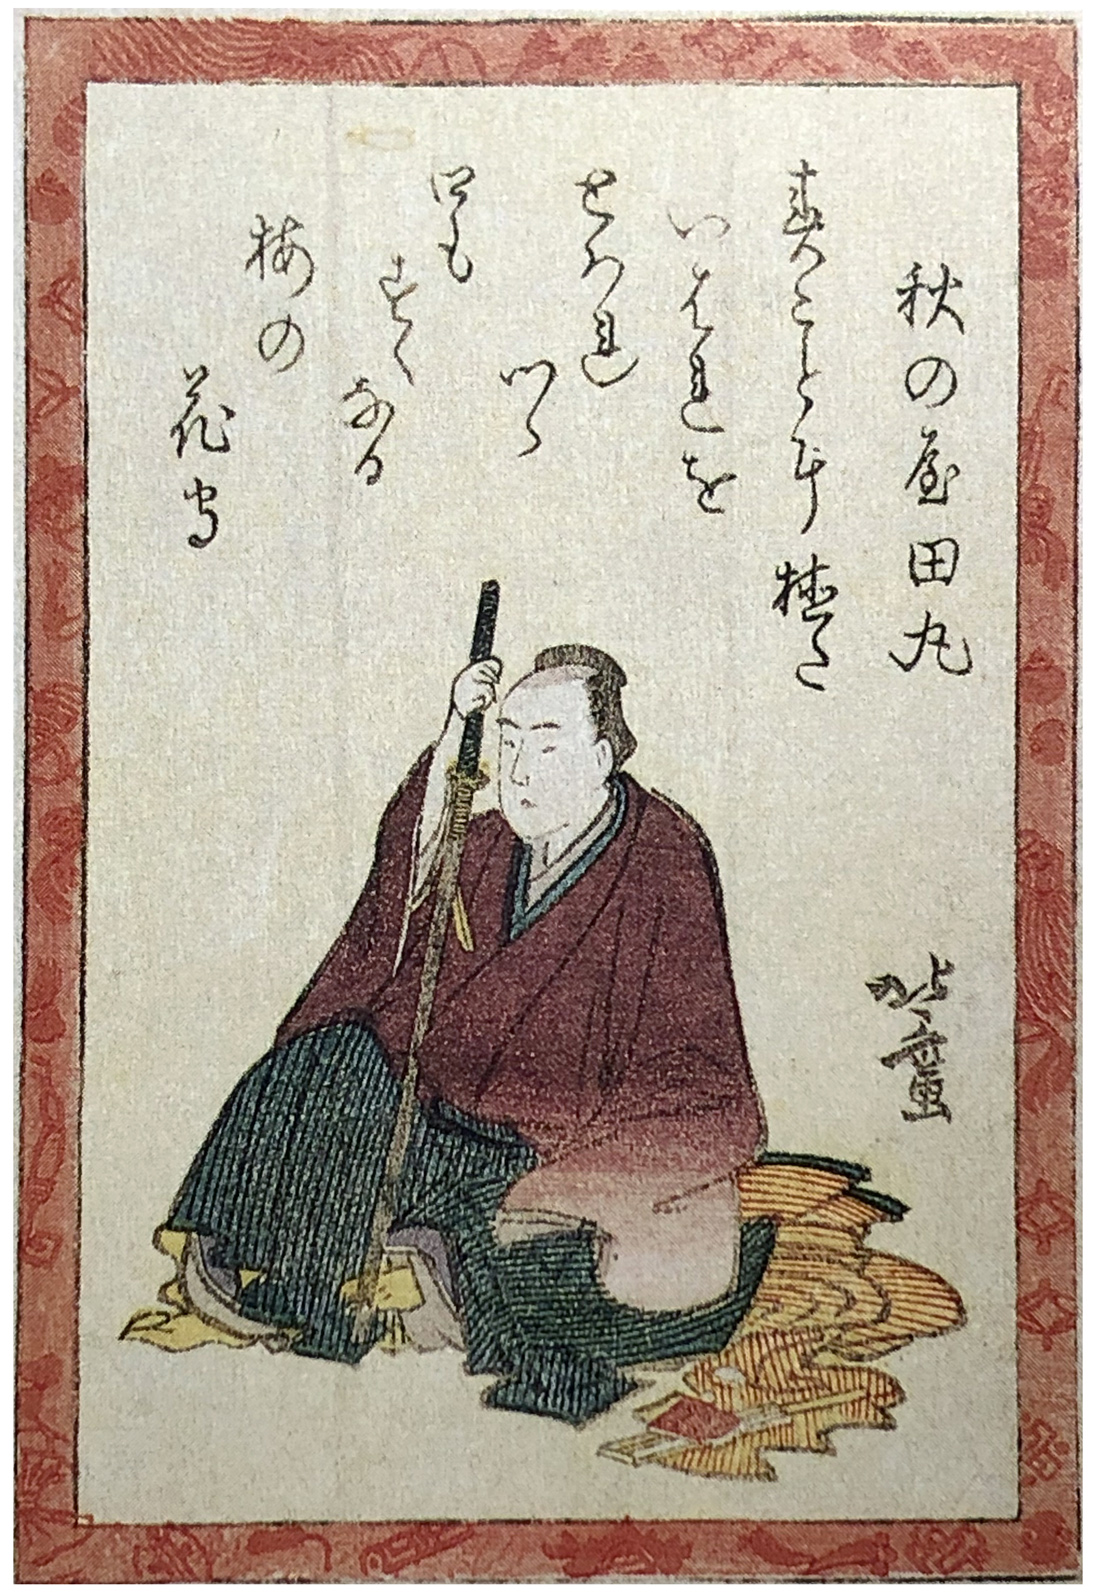 Hokusai - Poet #30 - 100 Kyoka Poets